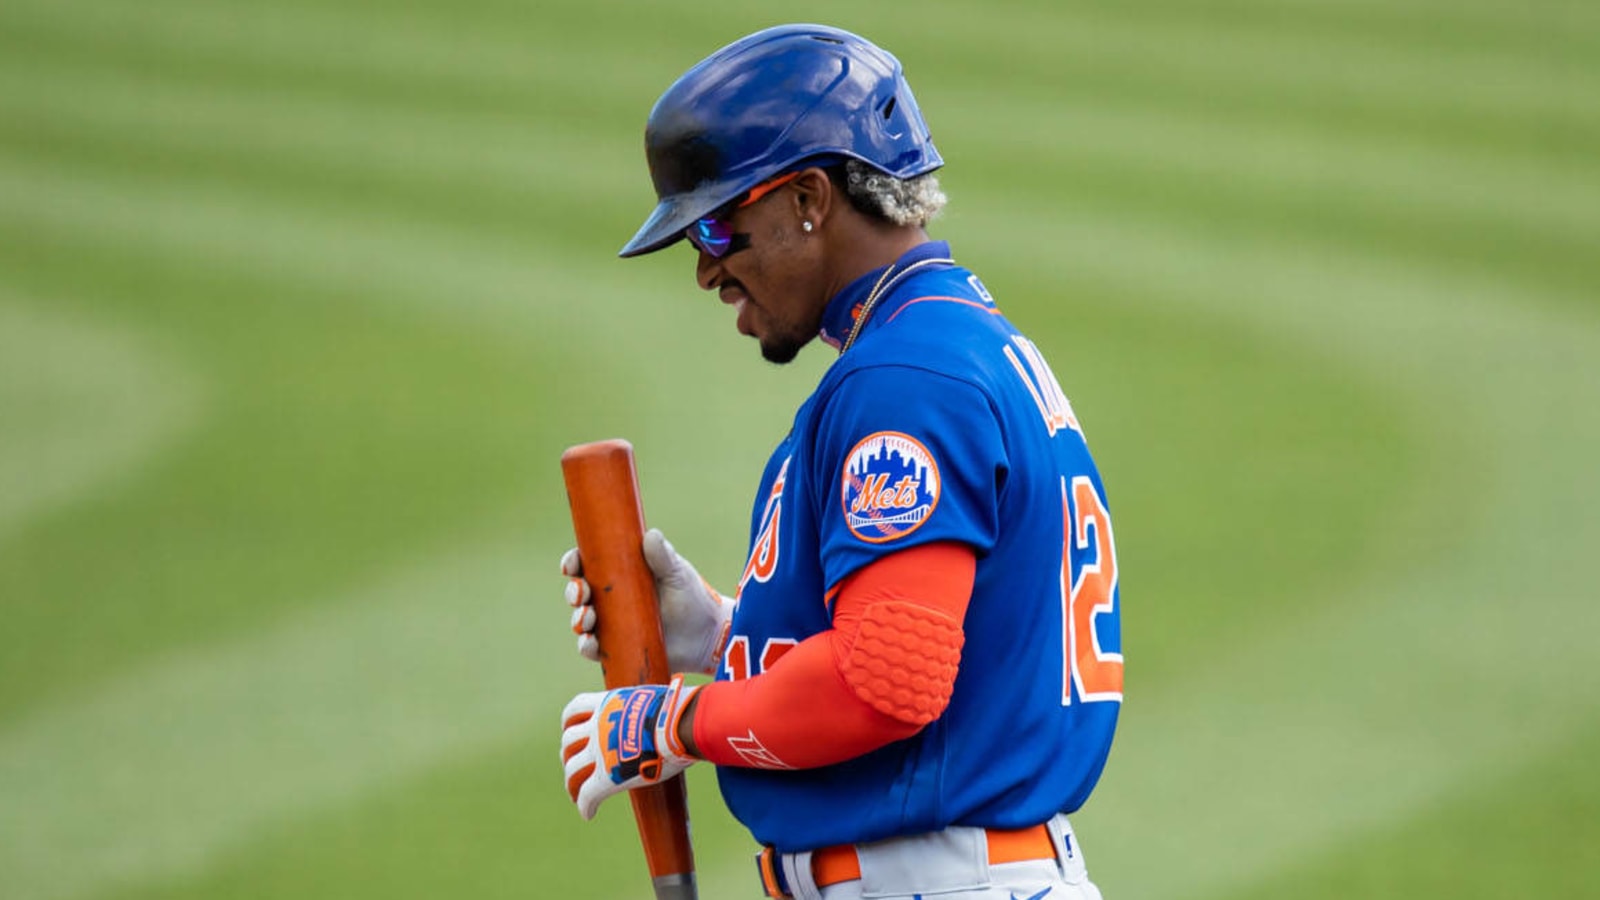 Mets shortstop Francisco Lindor has elbow surgery to remove bone spur –  KGET 17